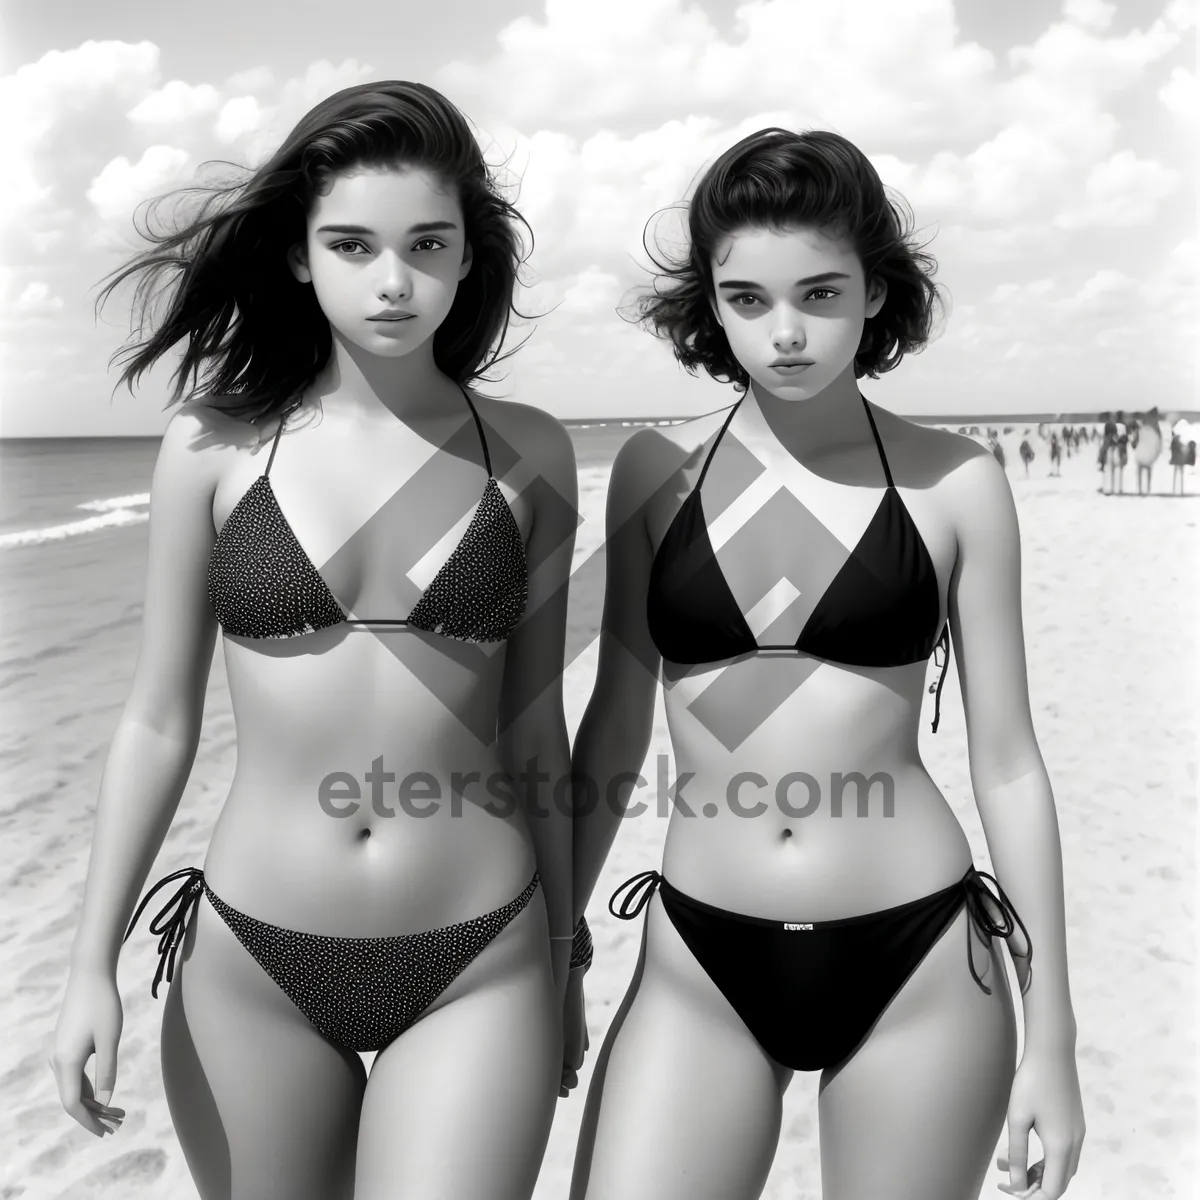 Picture of Seductive Beachwear: Stunning brunette model in lingerie poses sensually